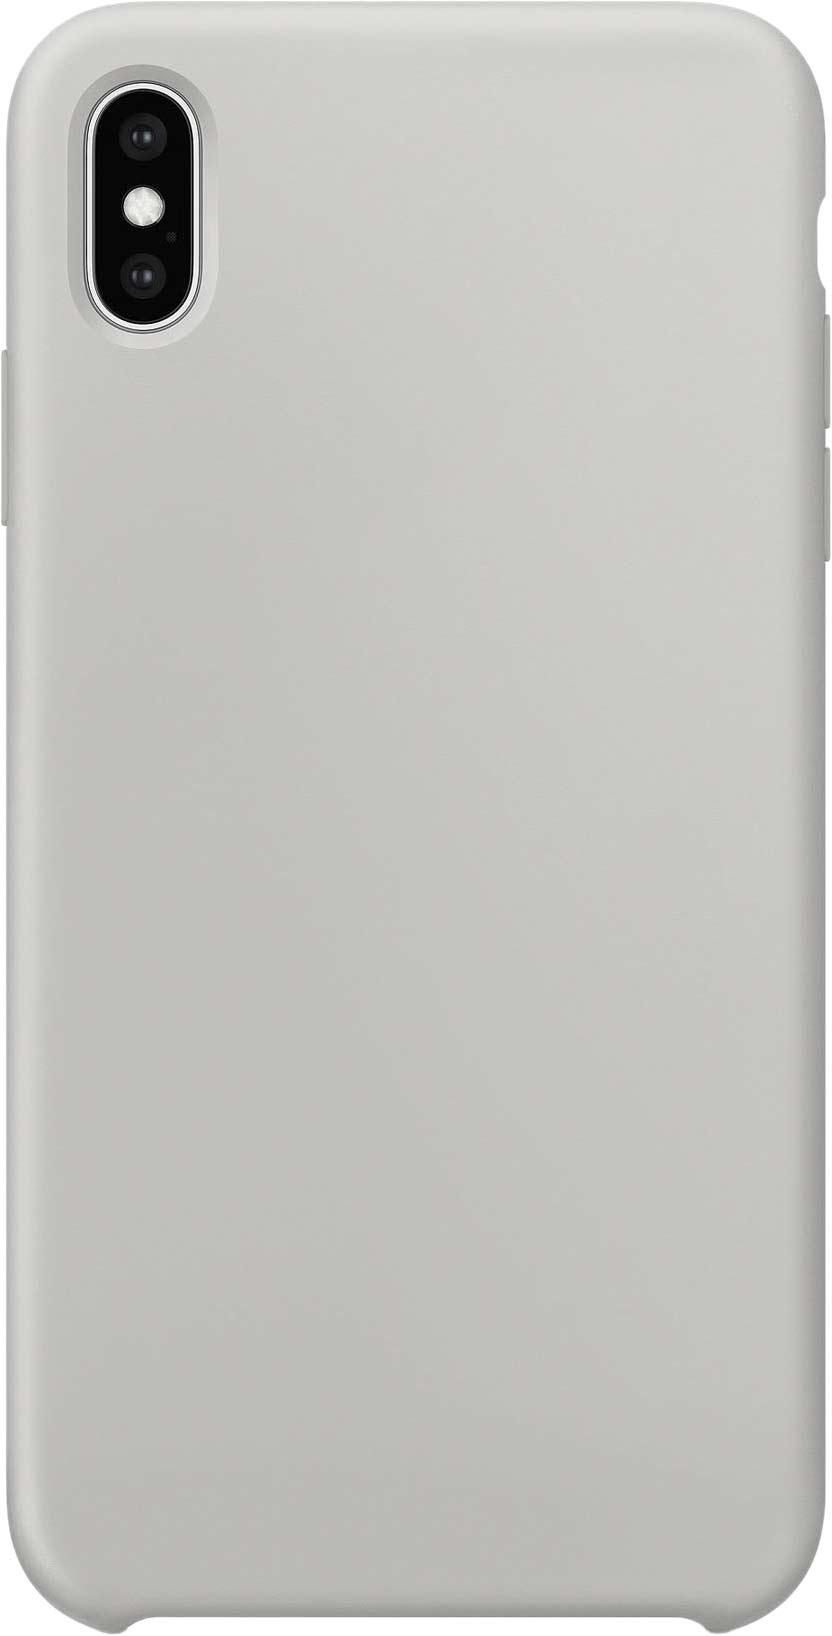 Чехол moonfish для iPhone XS Max, силикон, серый